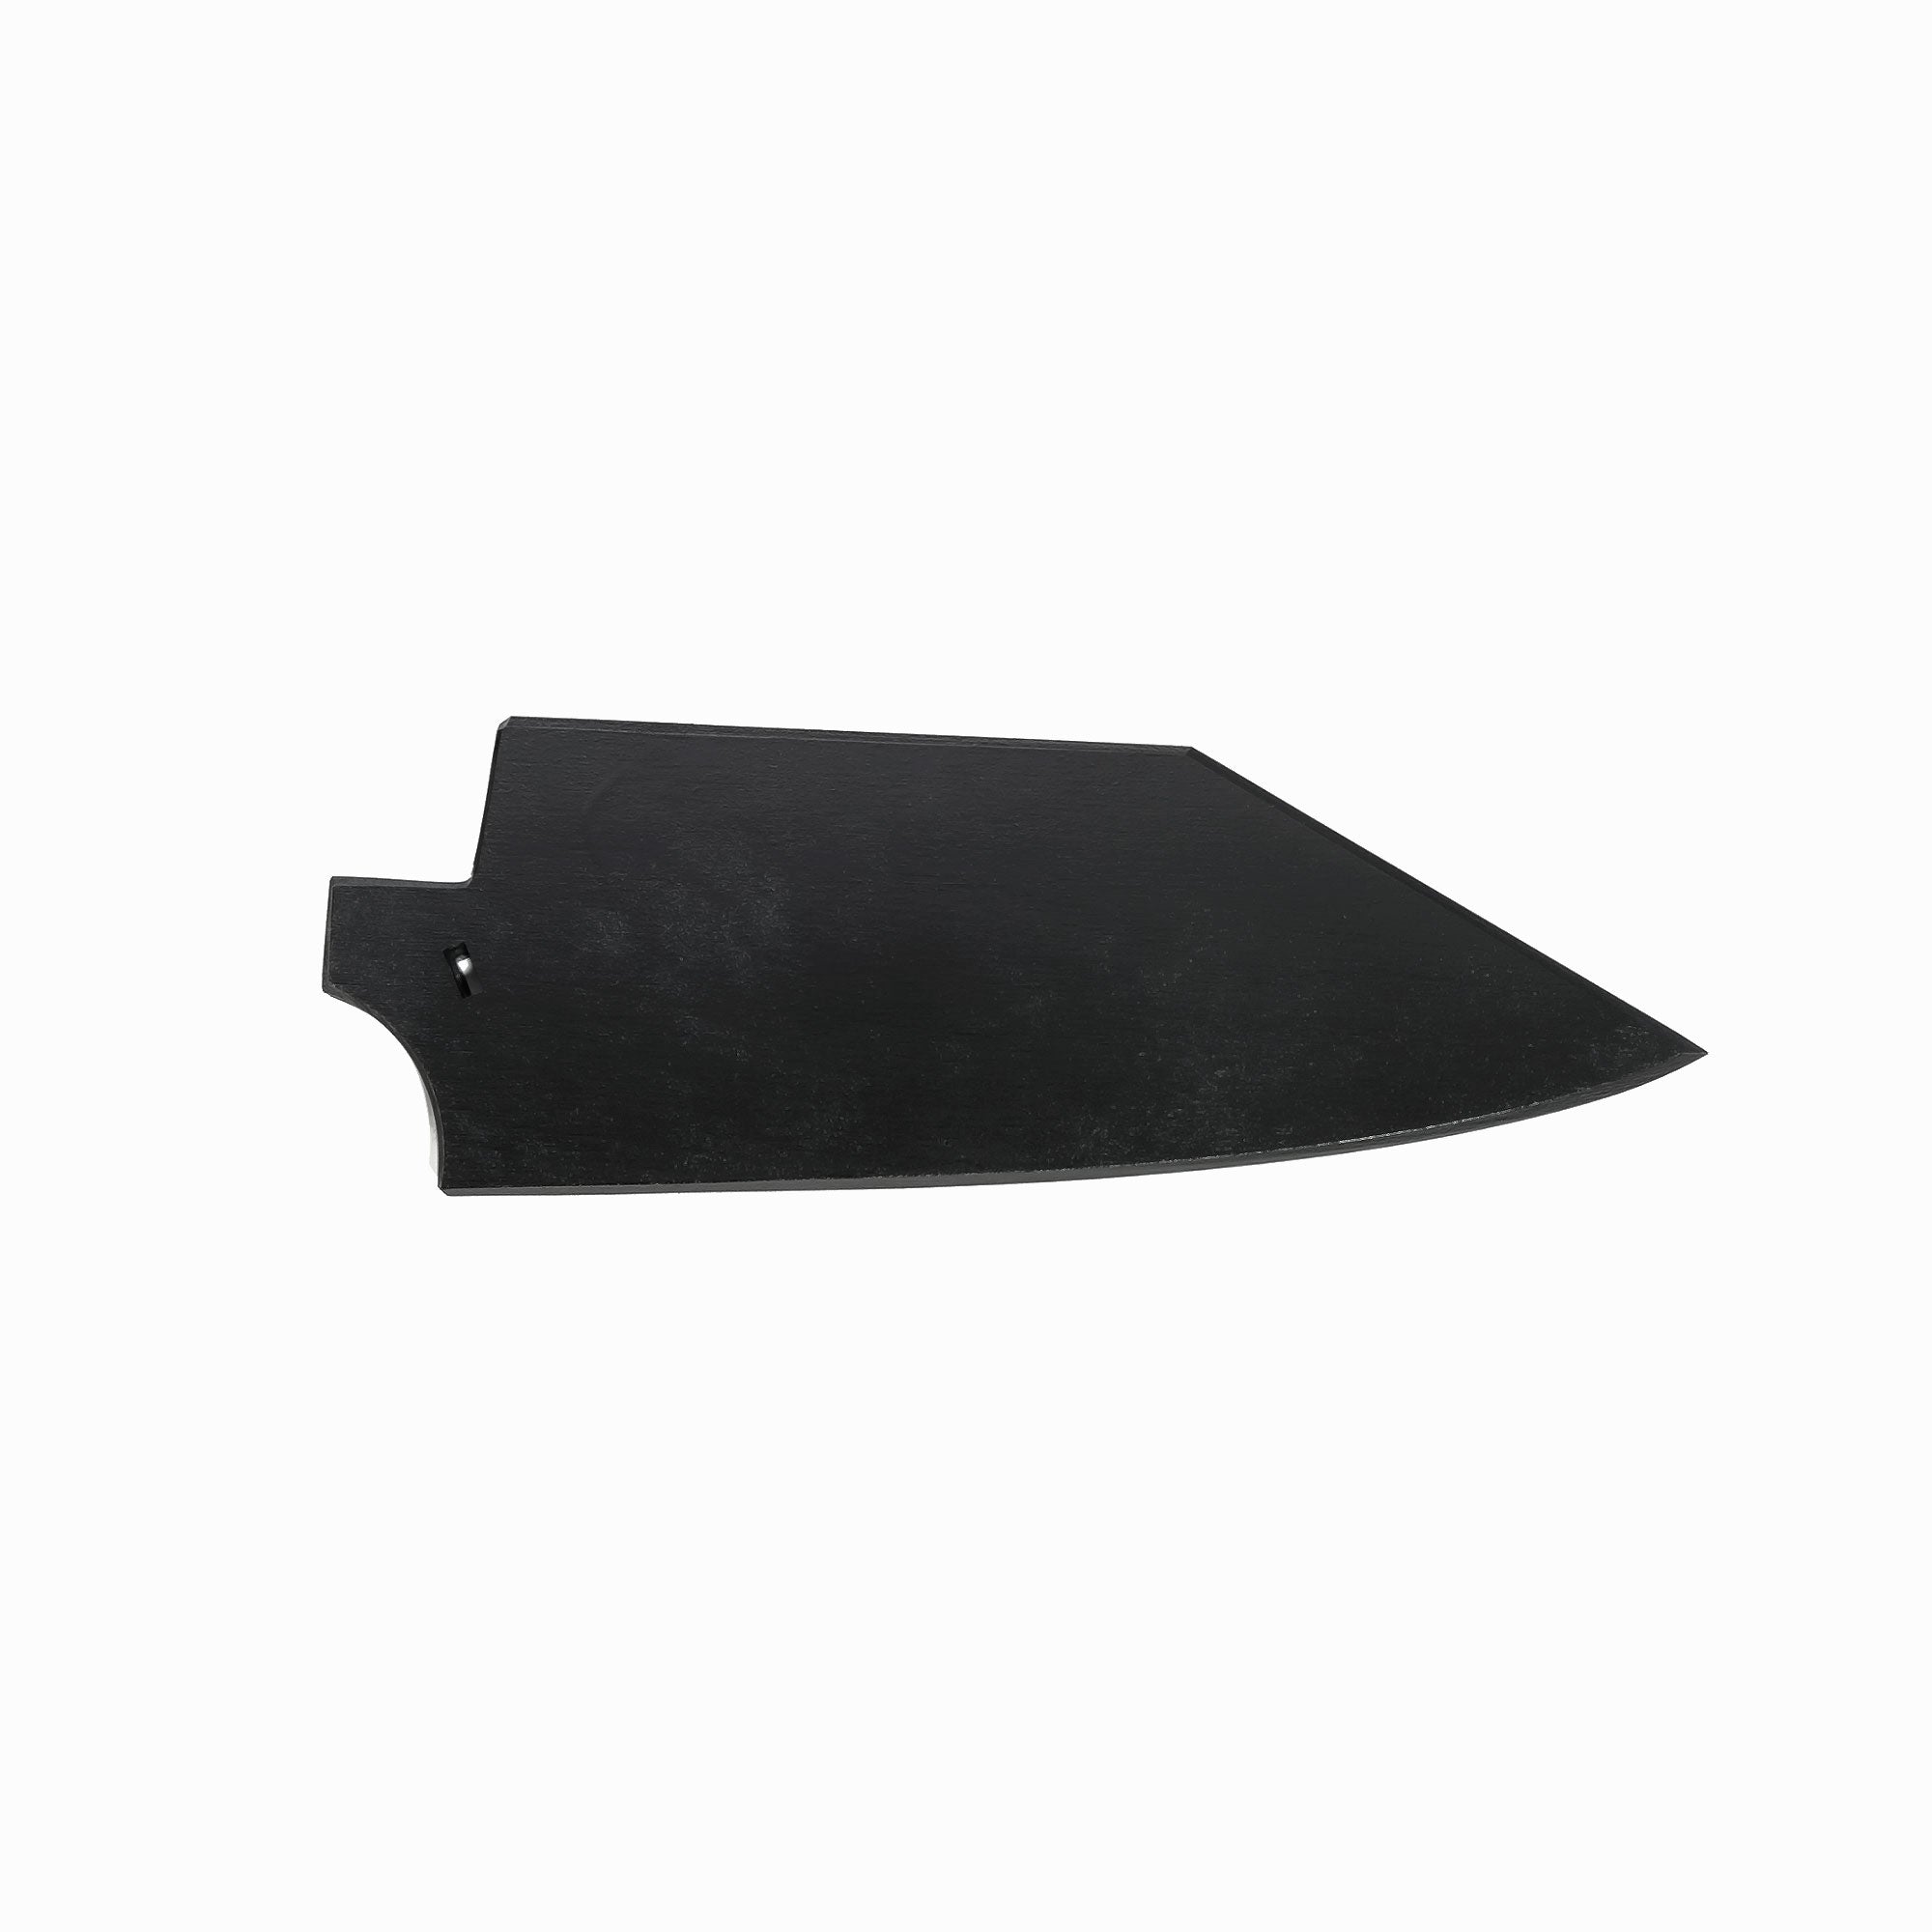 Black wood saya knife sheath for Town Cutler Desert Dawn and Olneya 7.5" Chopper knife.